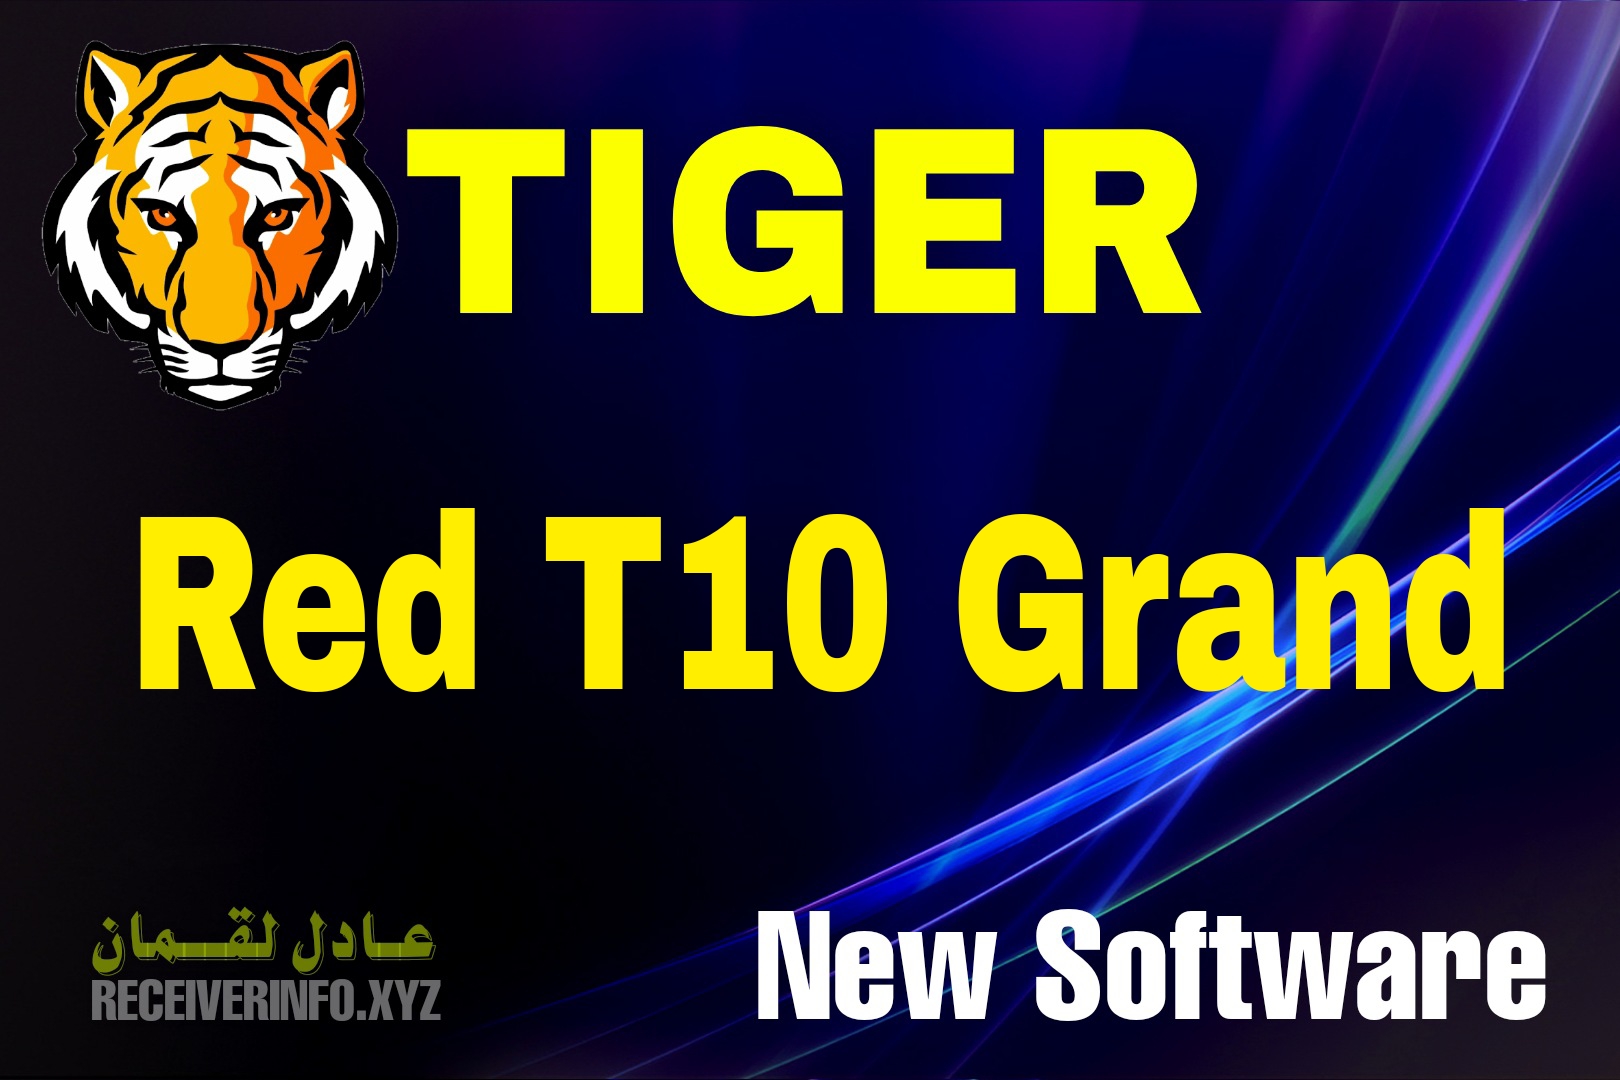 Tiger,Tiger Red T10 Grand,Tiger T10 Grand Dump File Tiger T10 Grand Specification Tiger T10 Grand Price In Pakistan Tiger T10 Grand New Software,